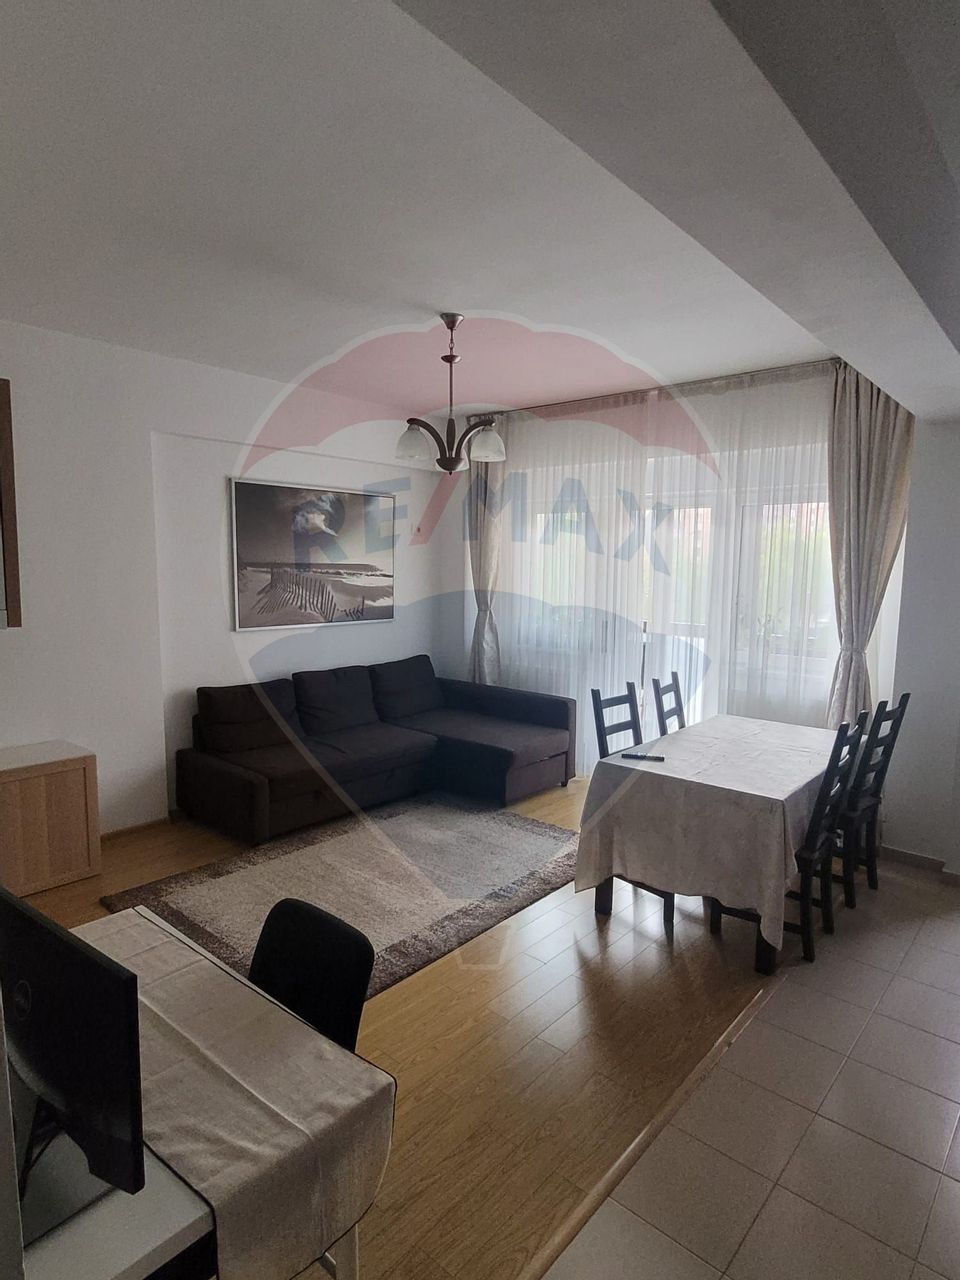 2 bedroom apartment for sale in Militari district